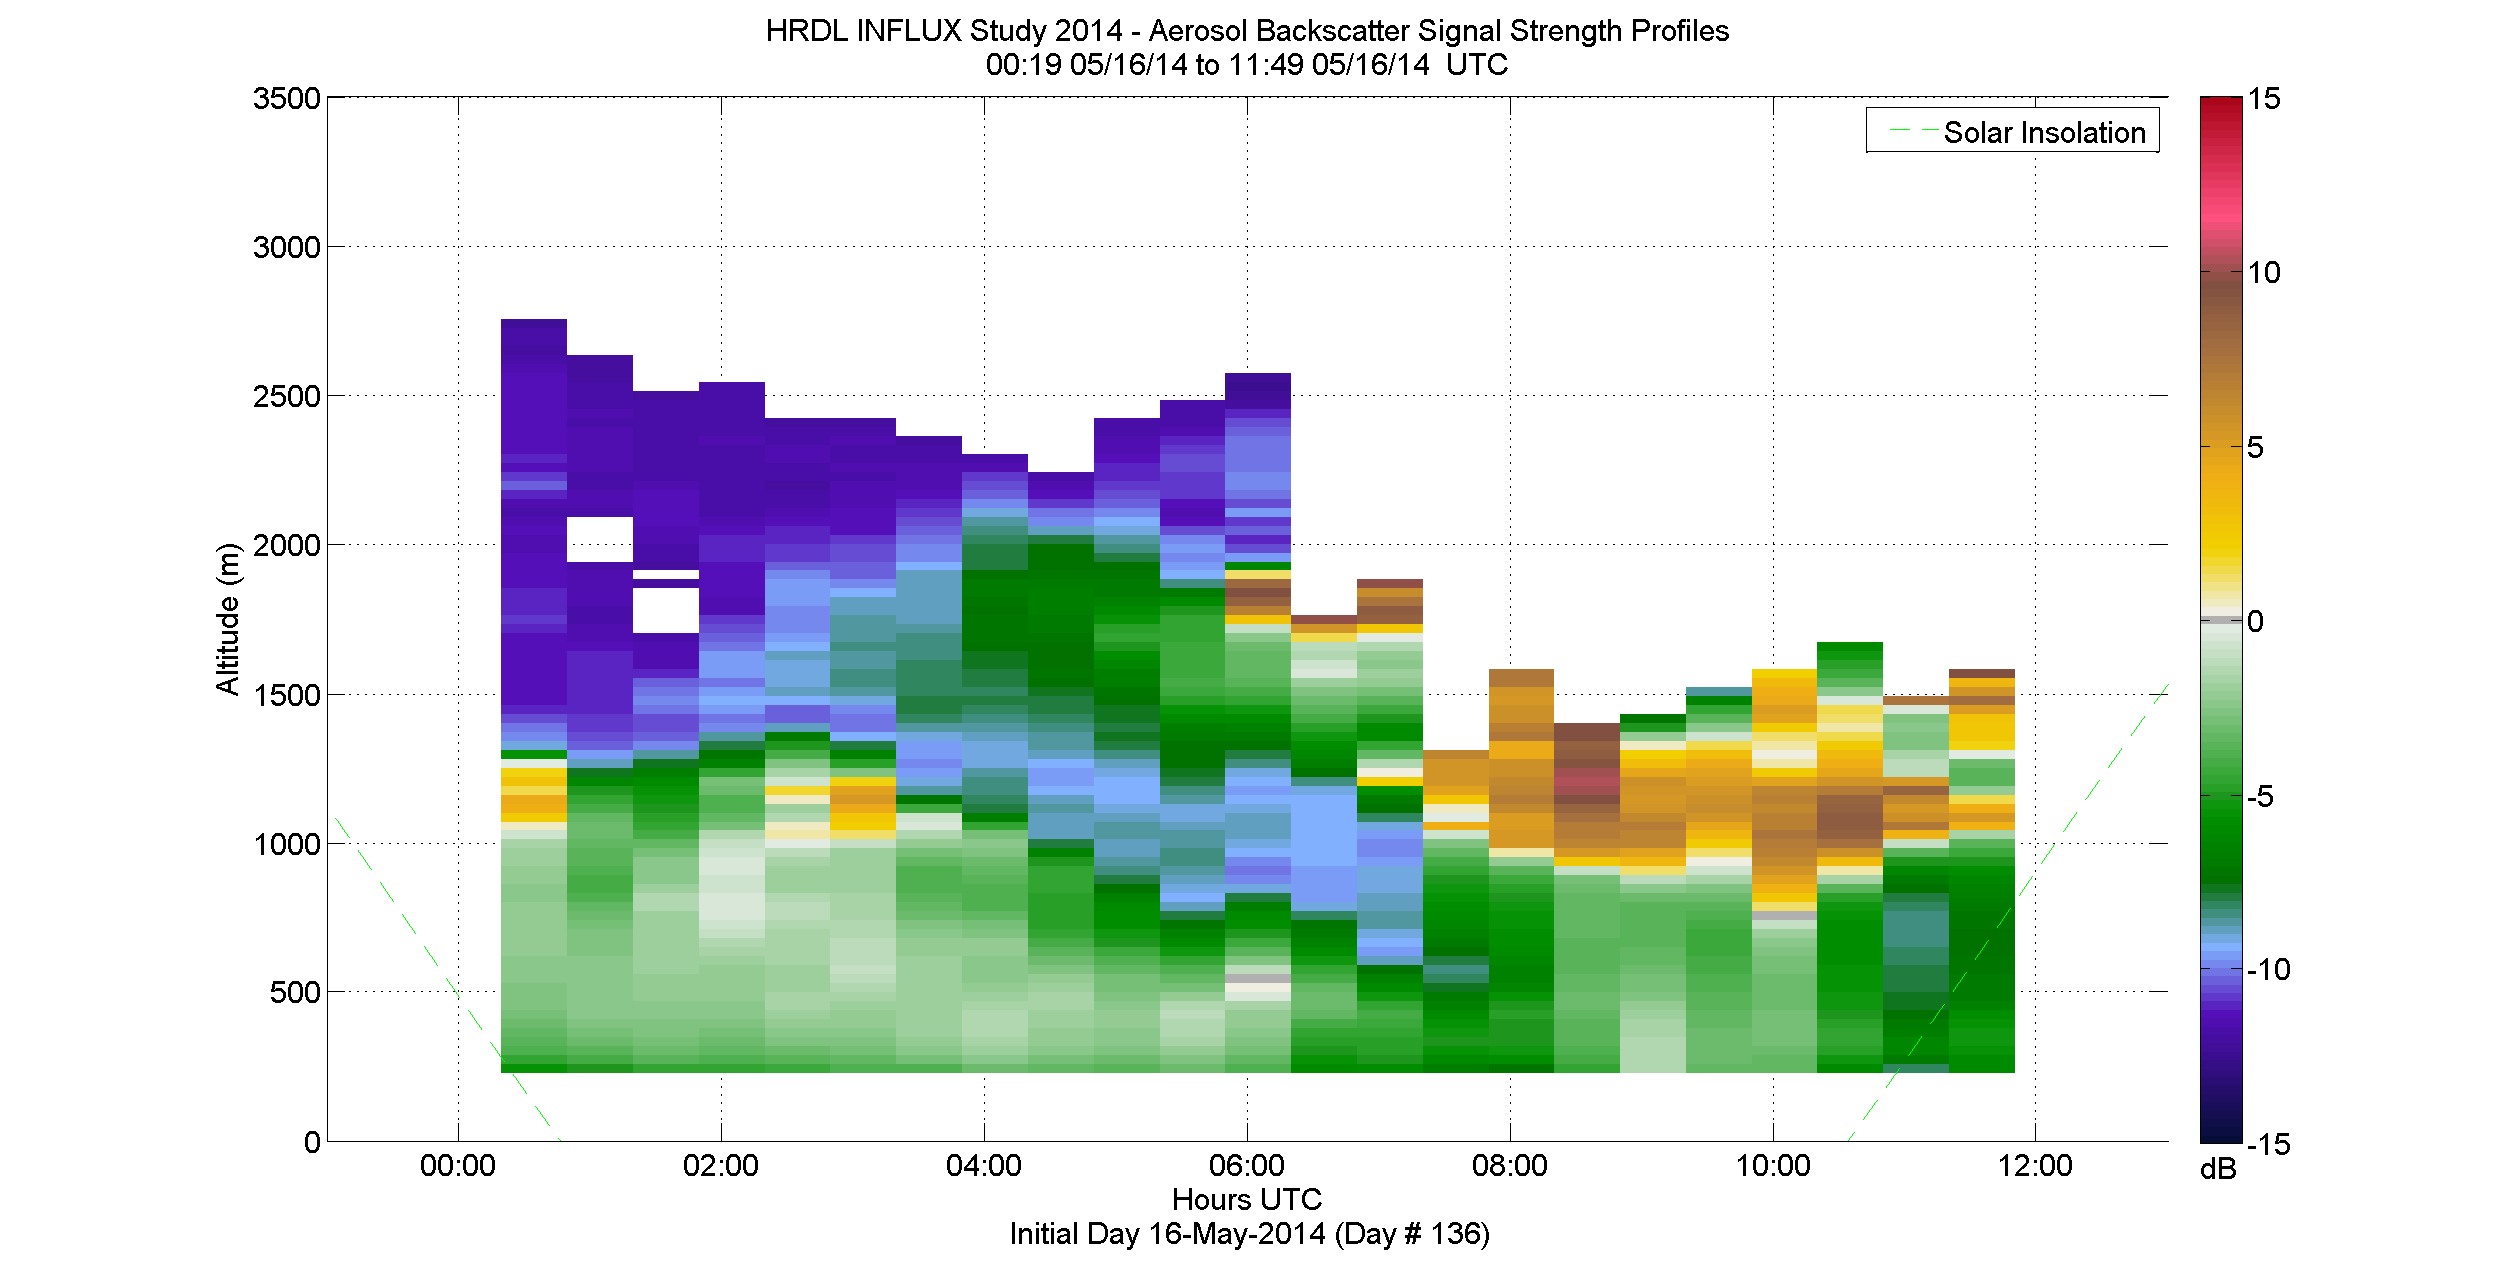 HRDL aerosol backscatter signal strength profile - May 16 am